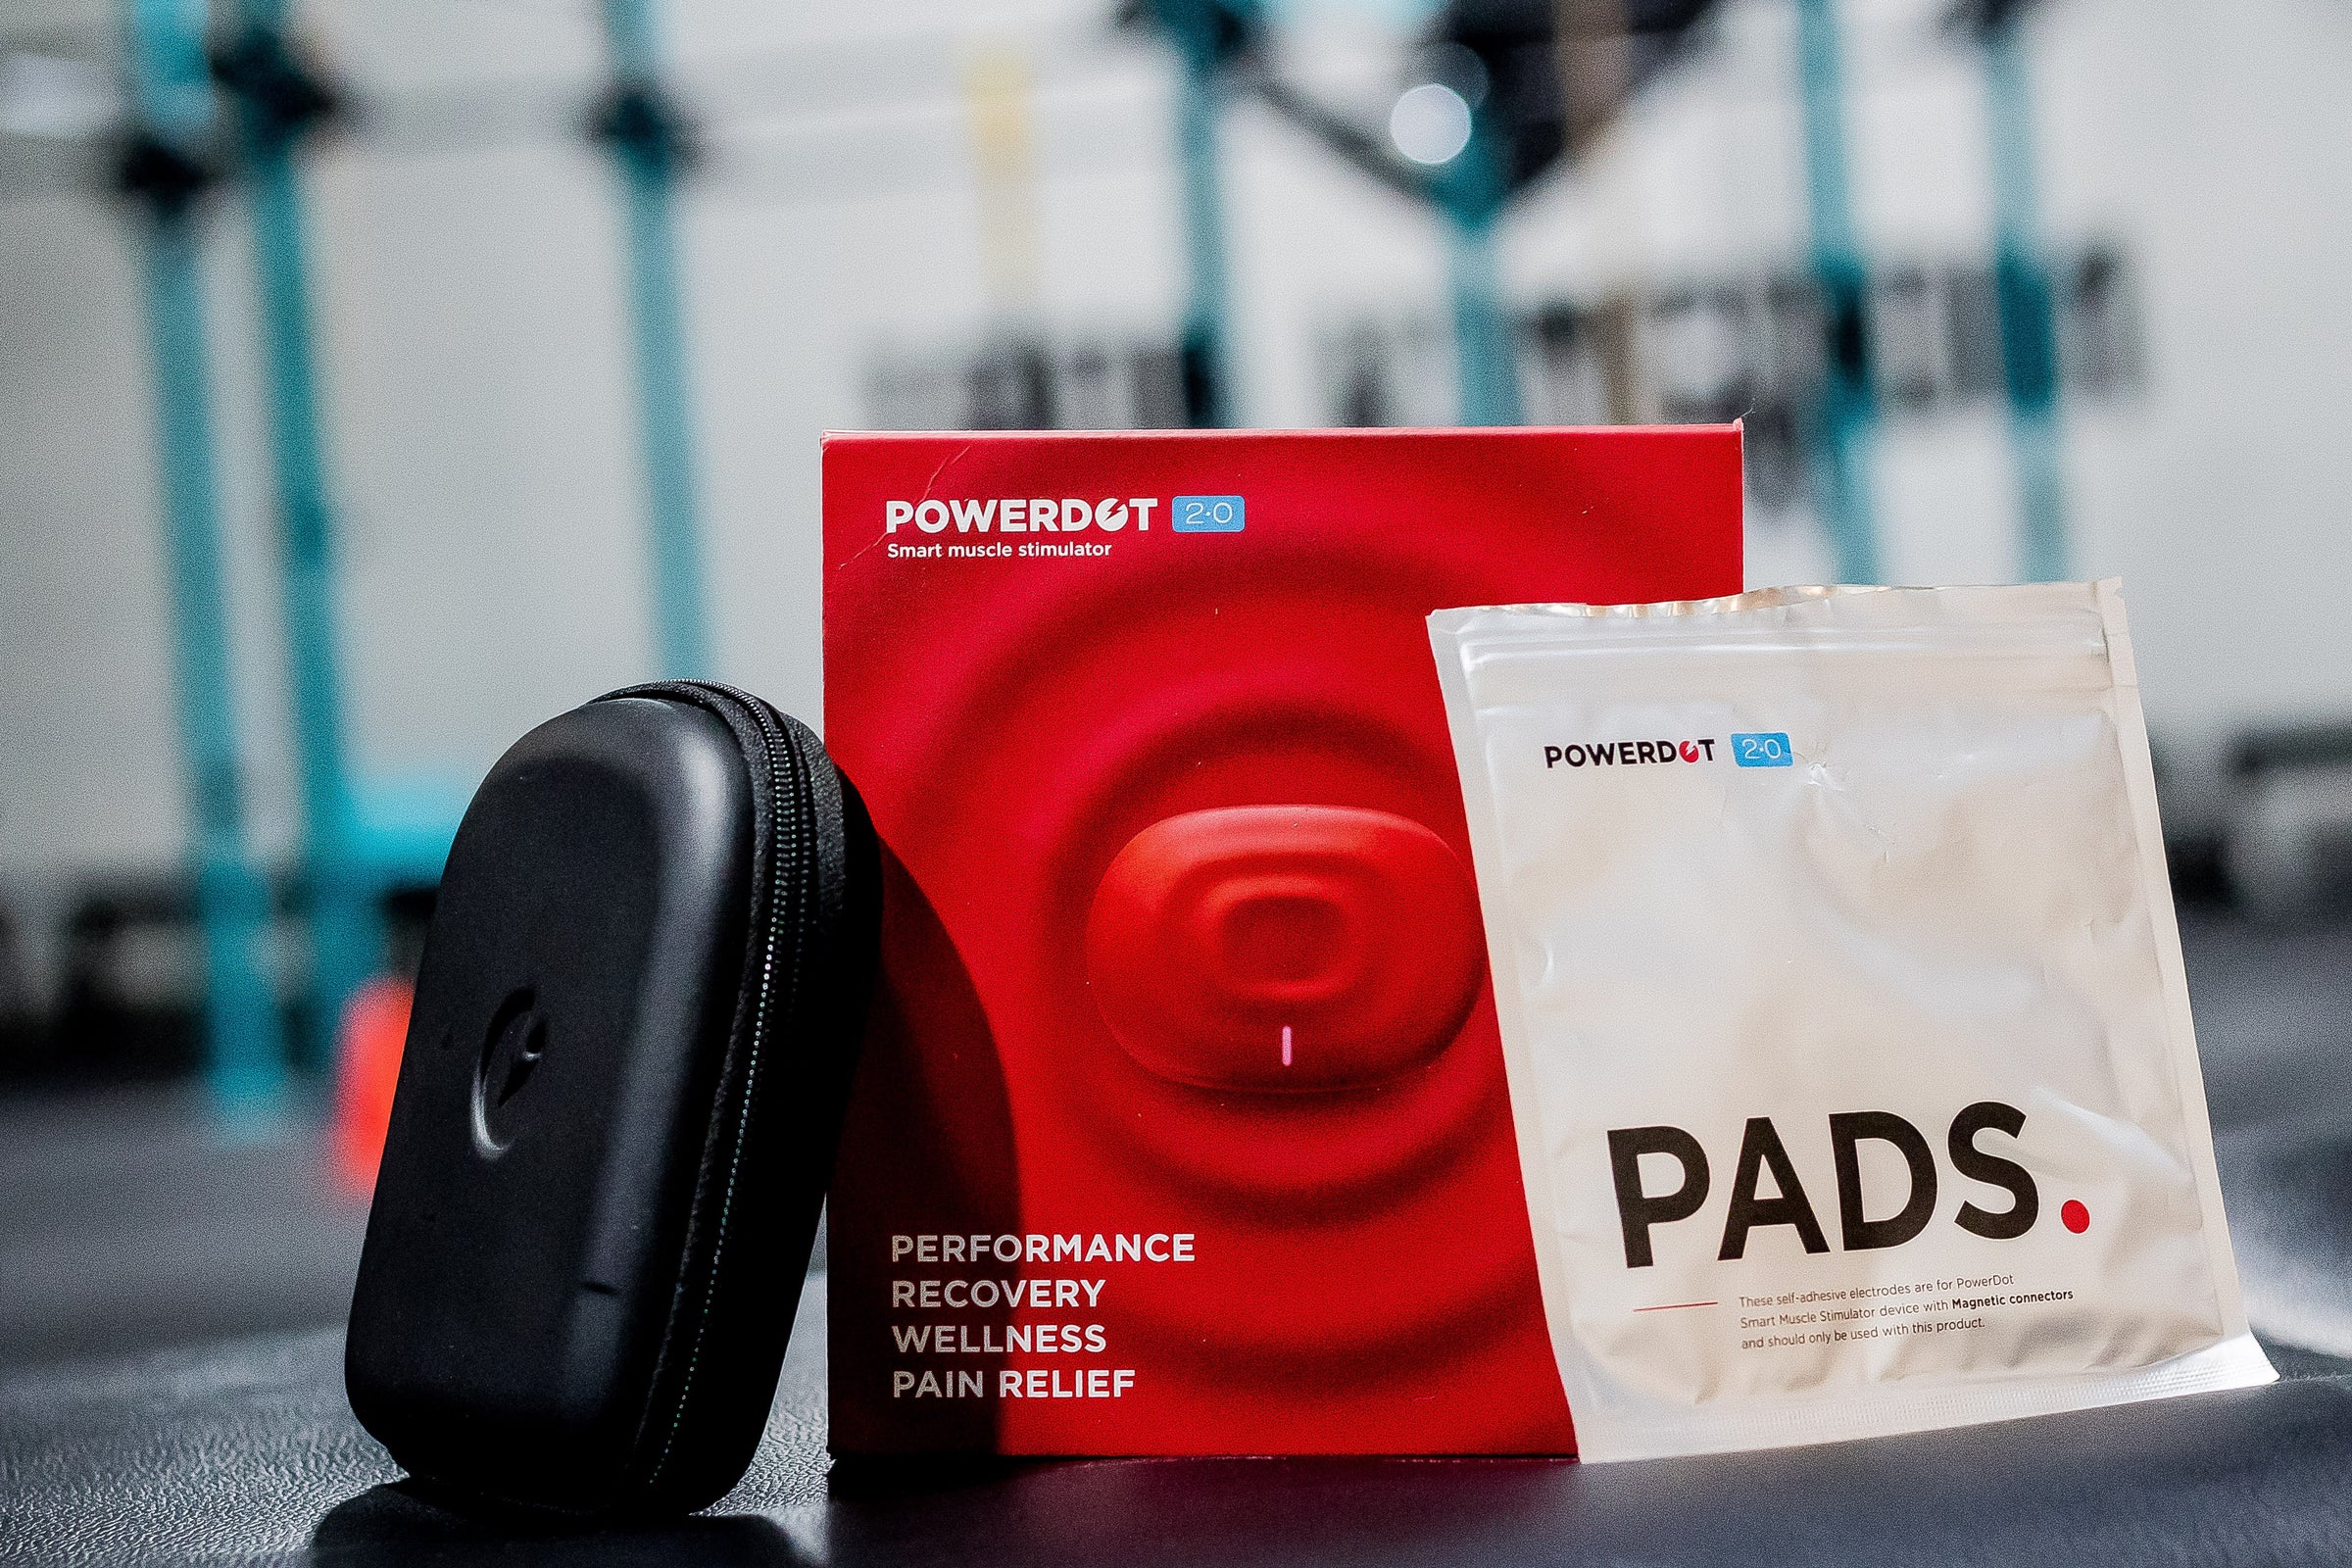 PowerDot 2.0 Smart Muscle Stimulator review - The Gadgeteer